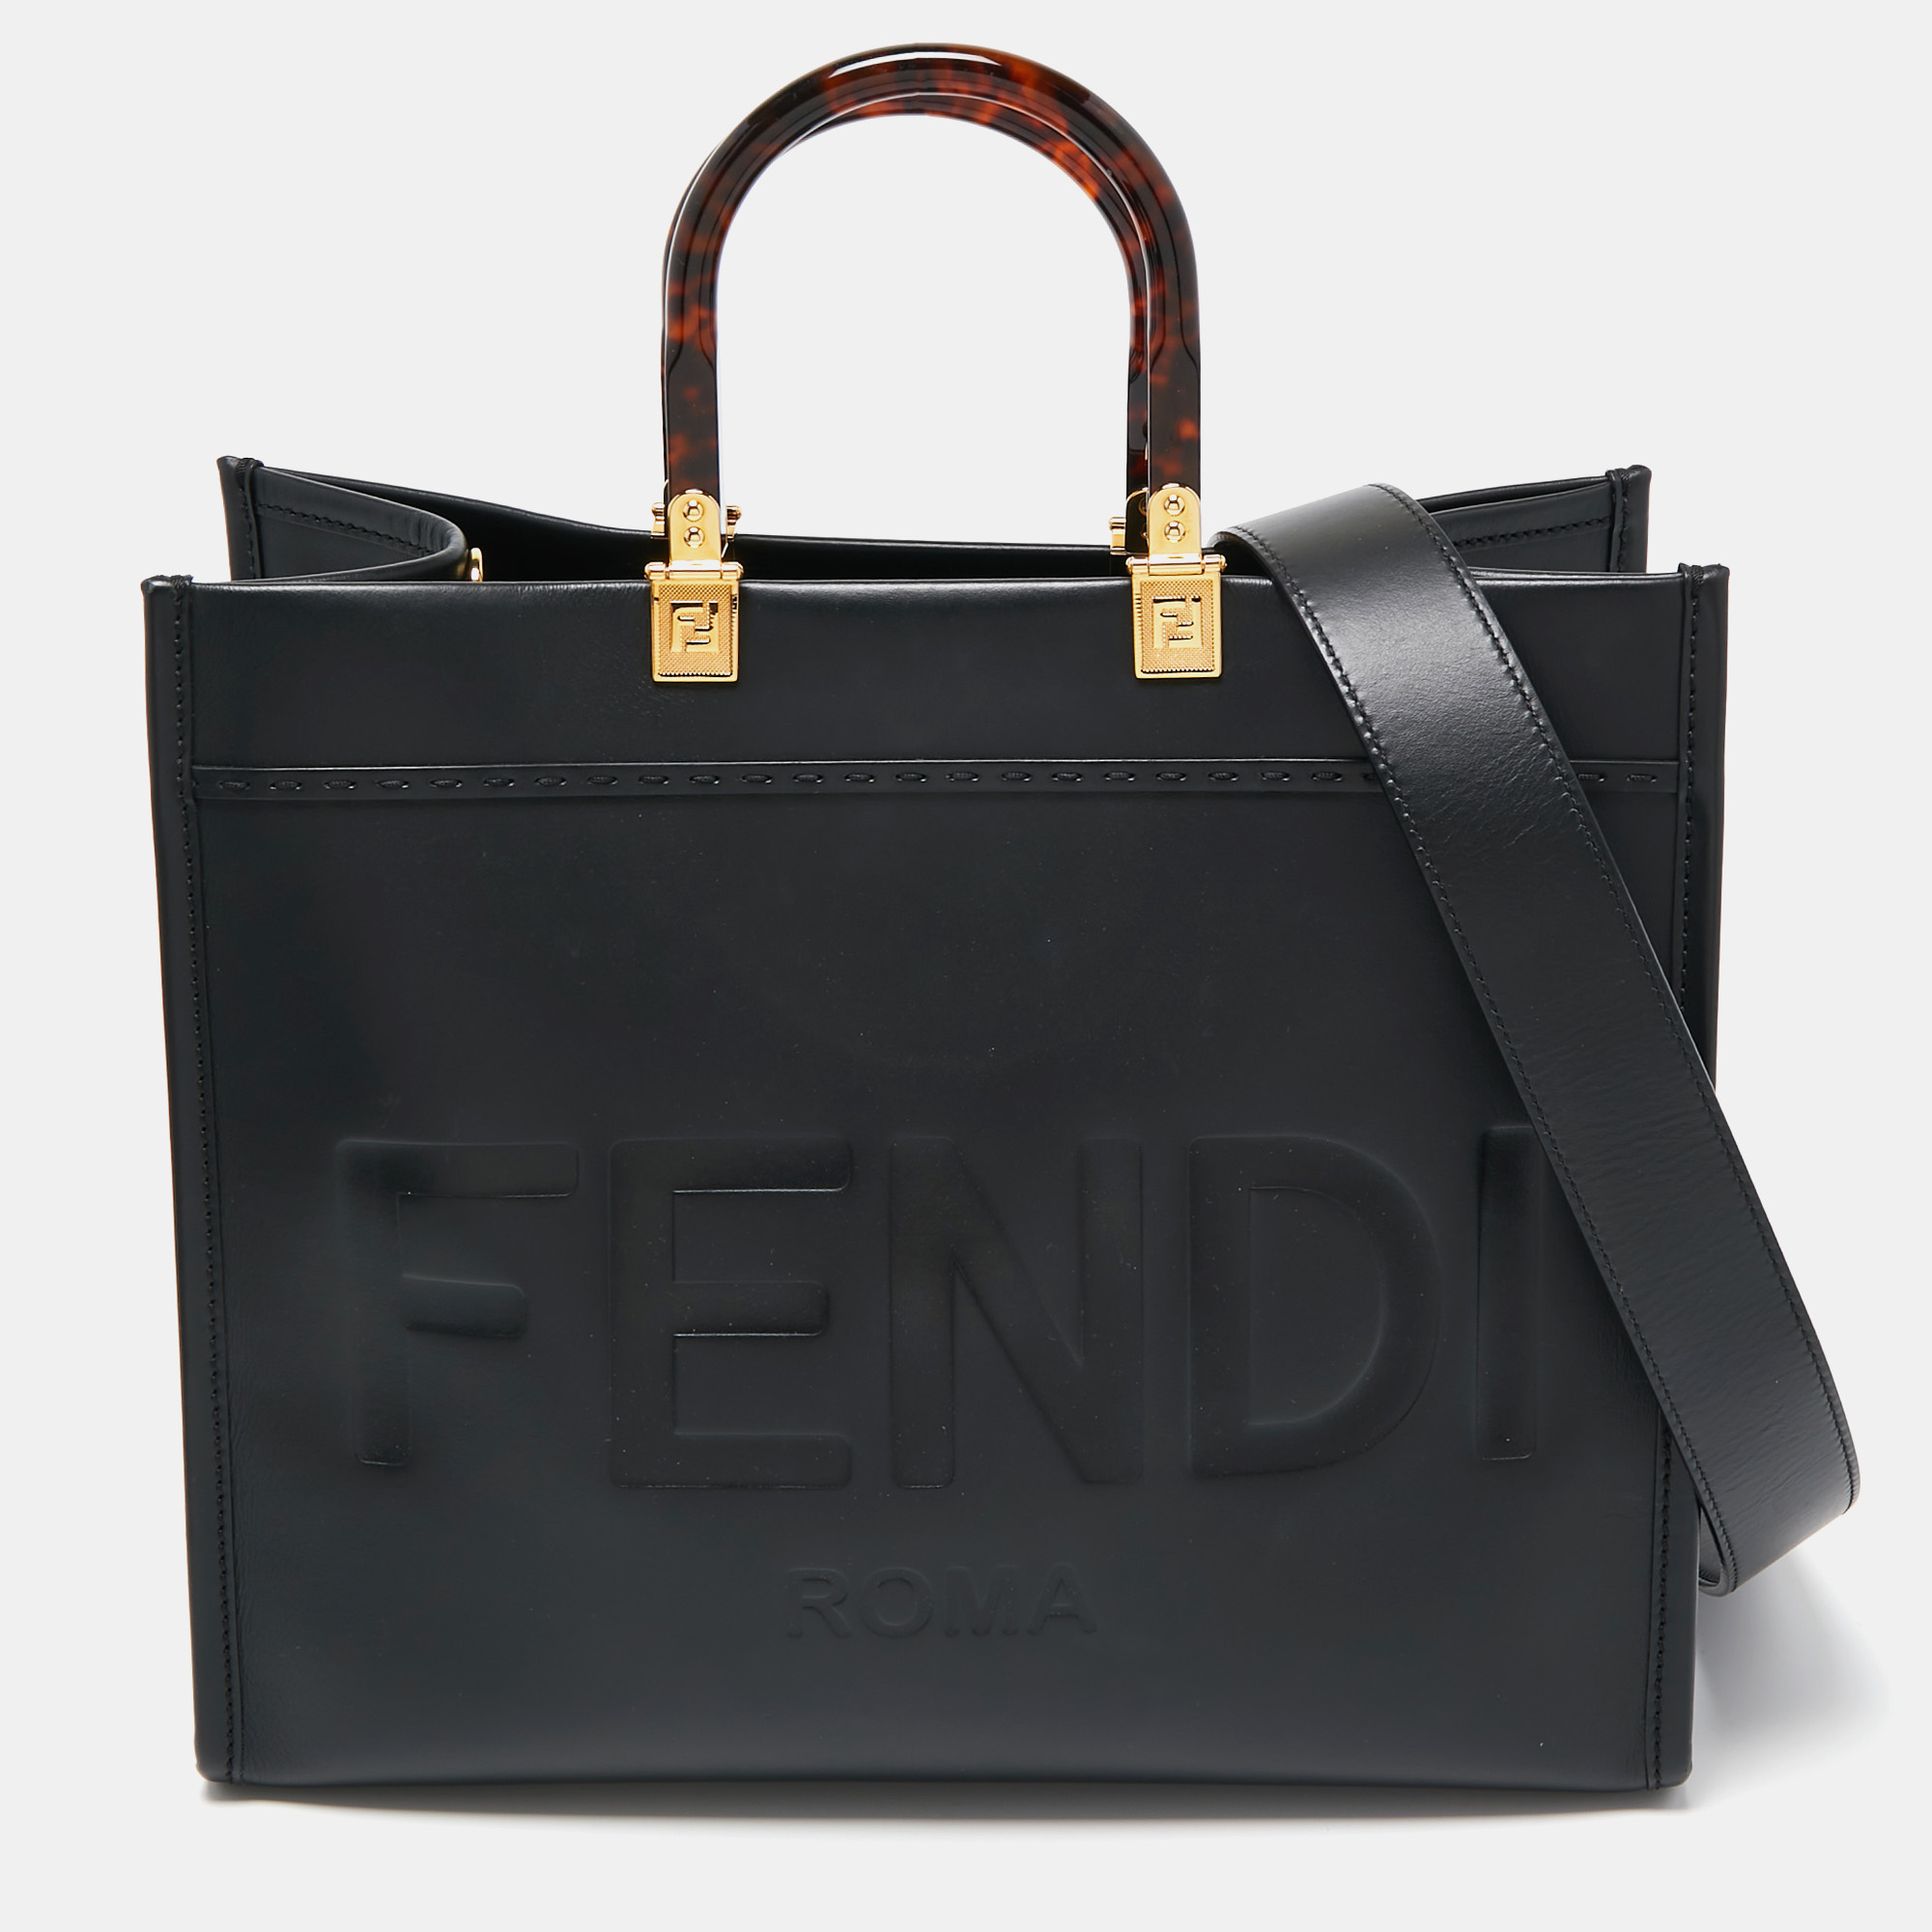 Pre-owned Fendi Black Leather Medium Sunshine Shopper Tote